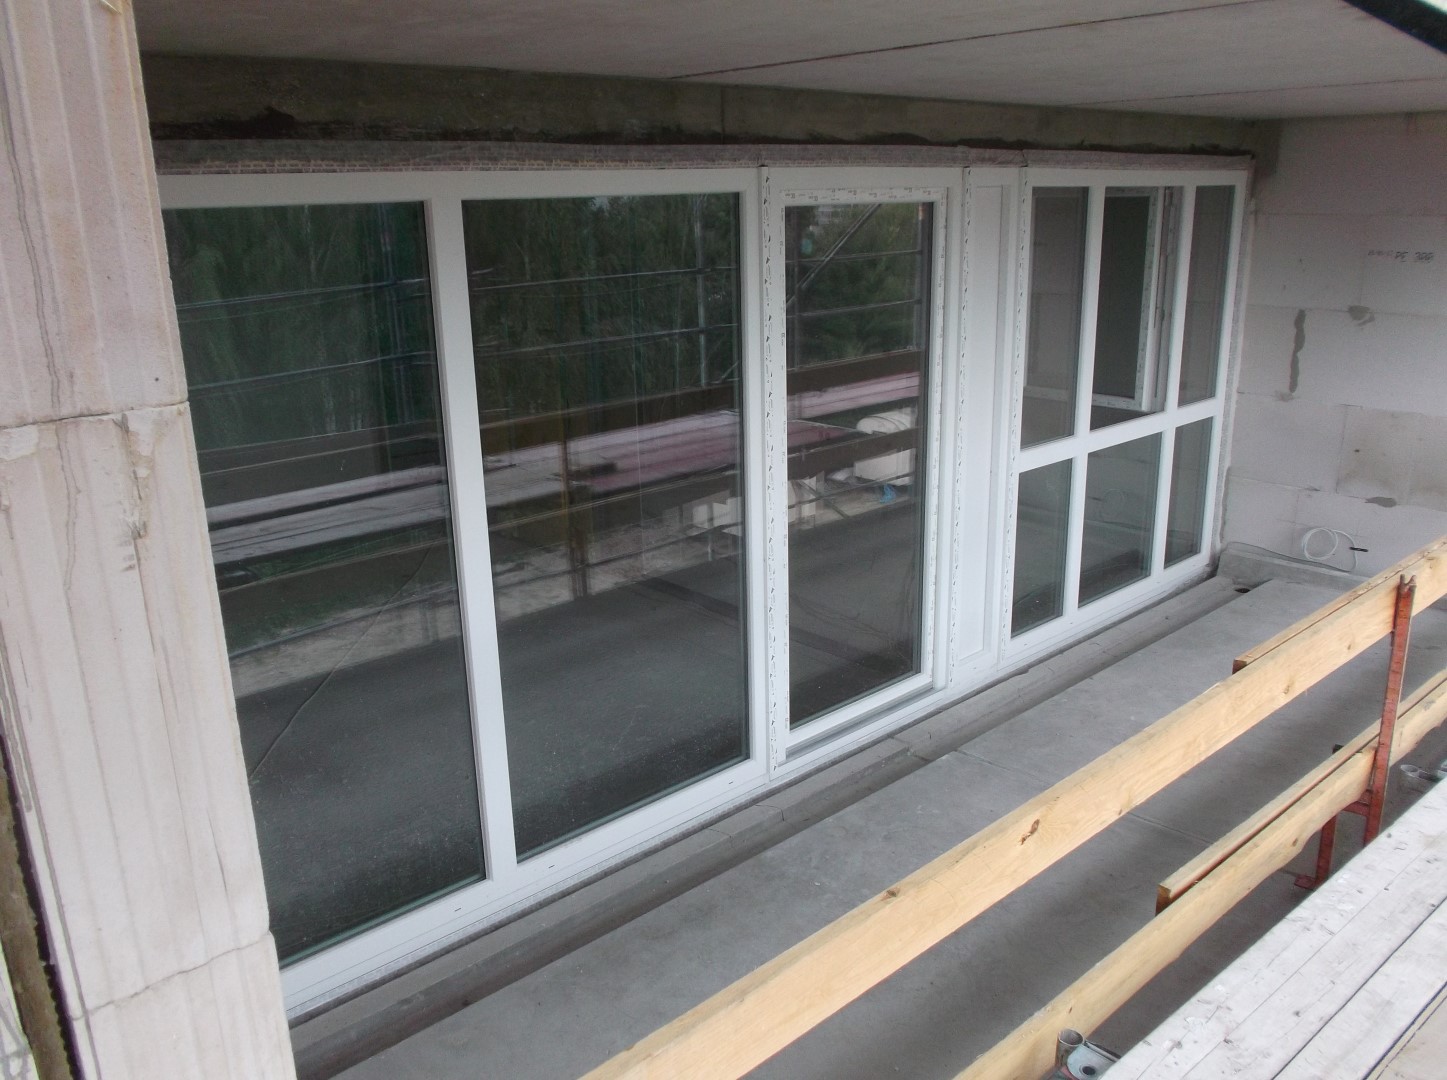 04.08.2014 - Balkon mit Fensterfront hofseitig